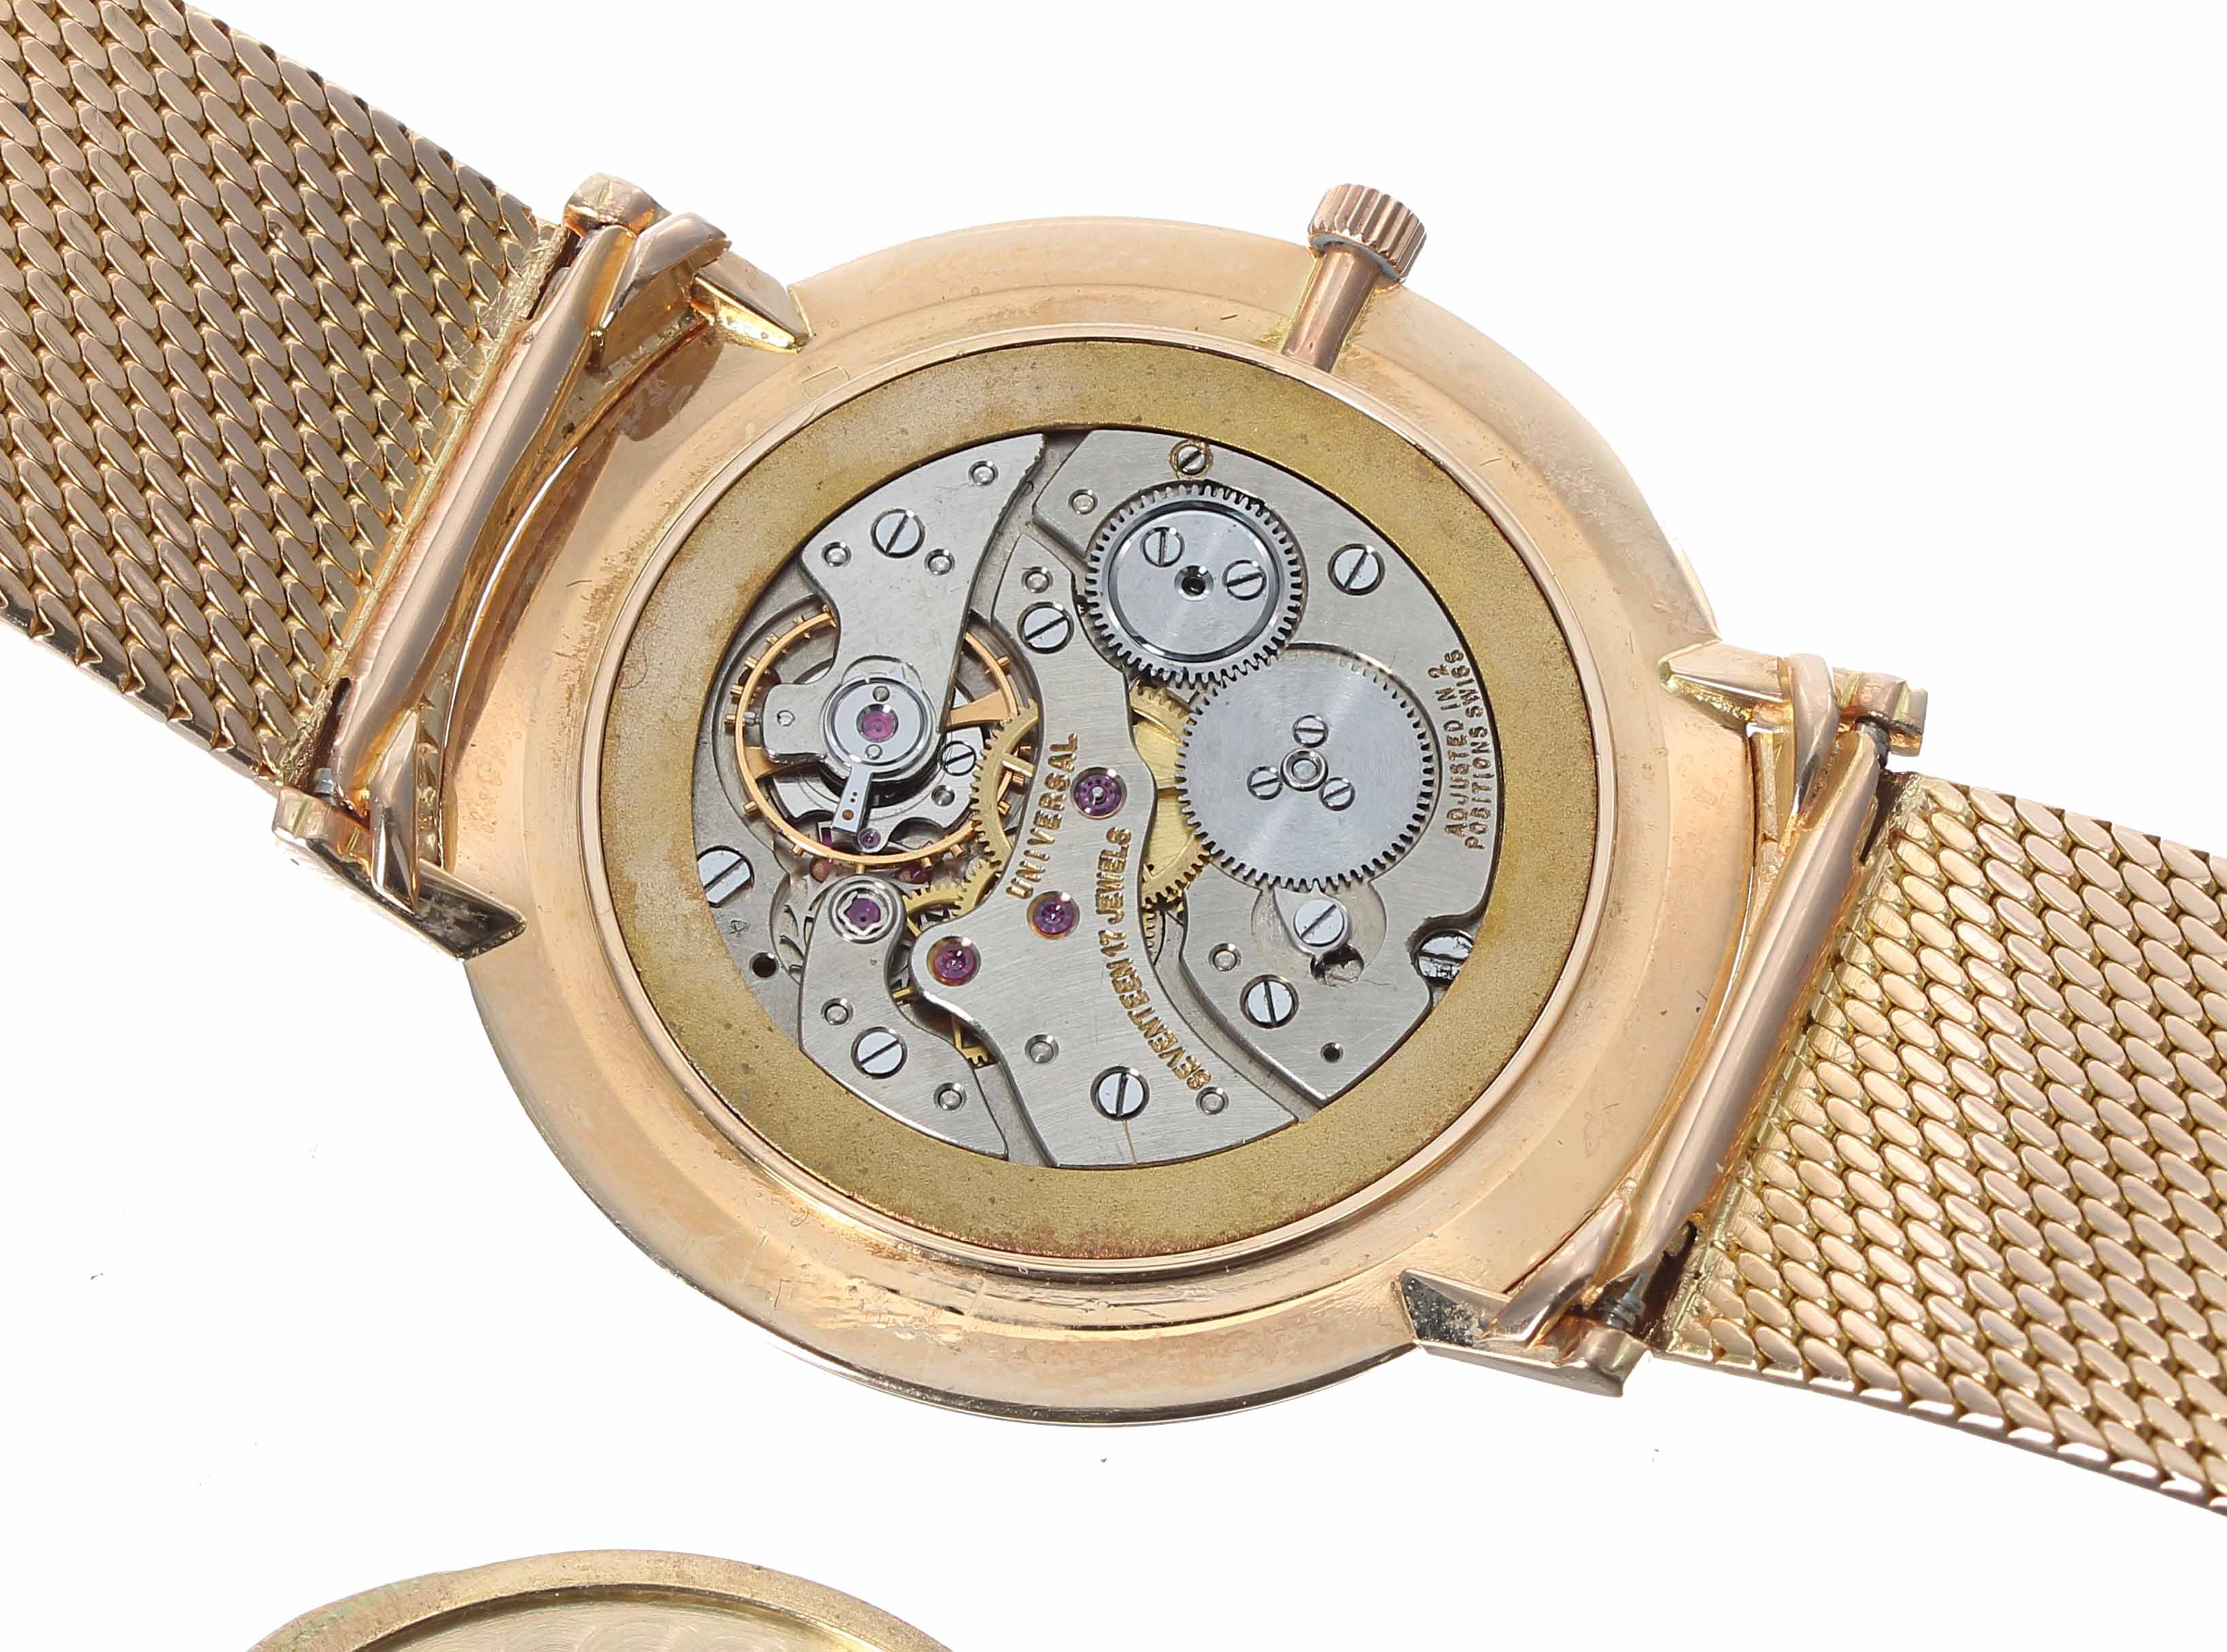 Universal Genéve slim 18ct pink gold gentleman's wristwatch, case no. 5320 5 9904 5, circular dial - Image 3 of 4